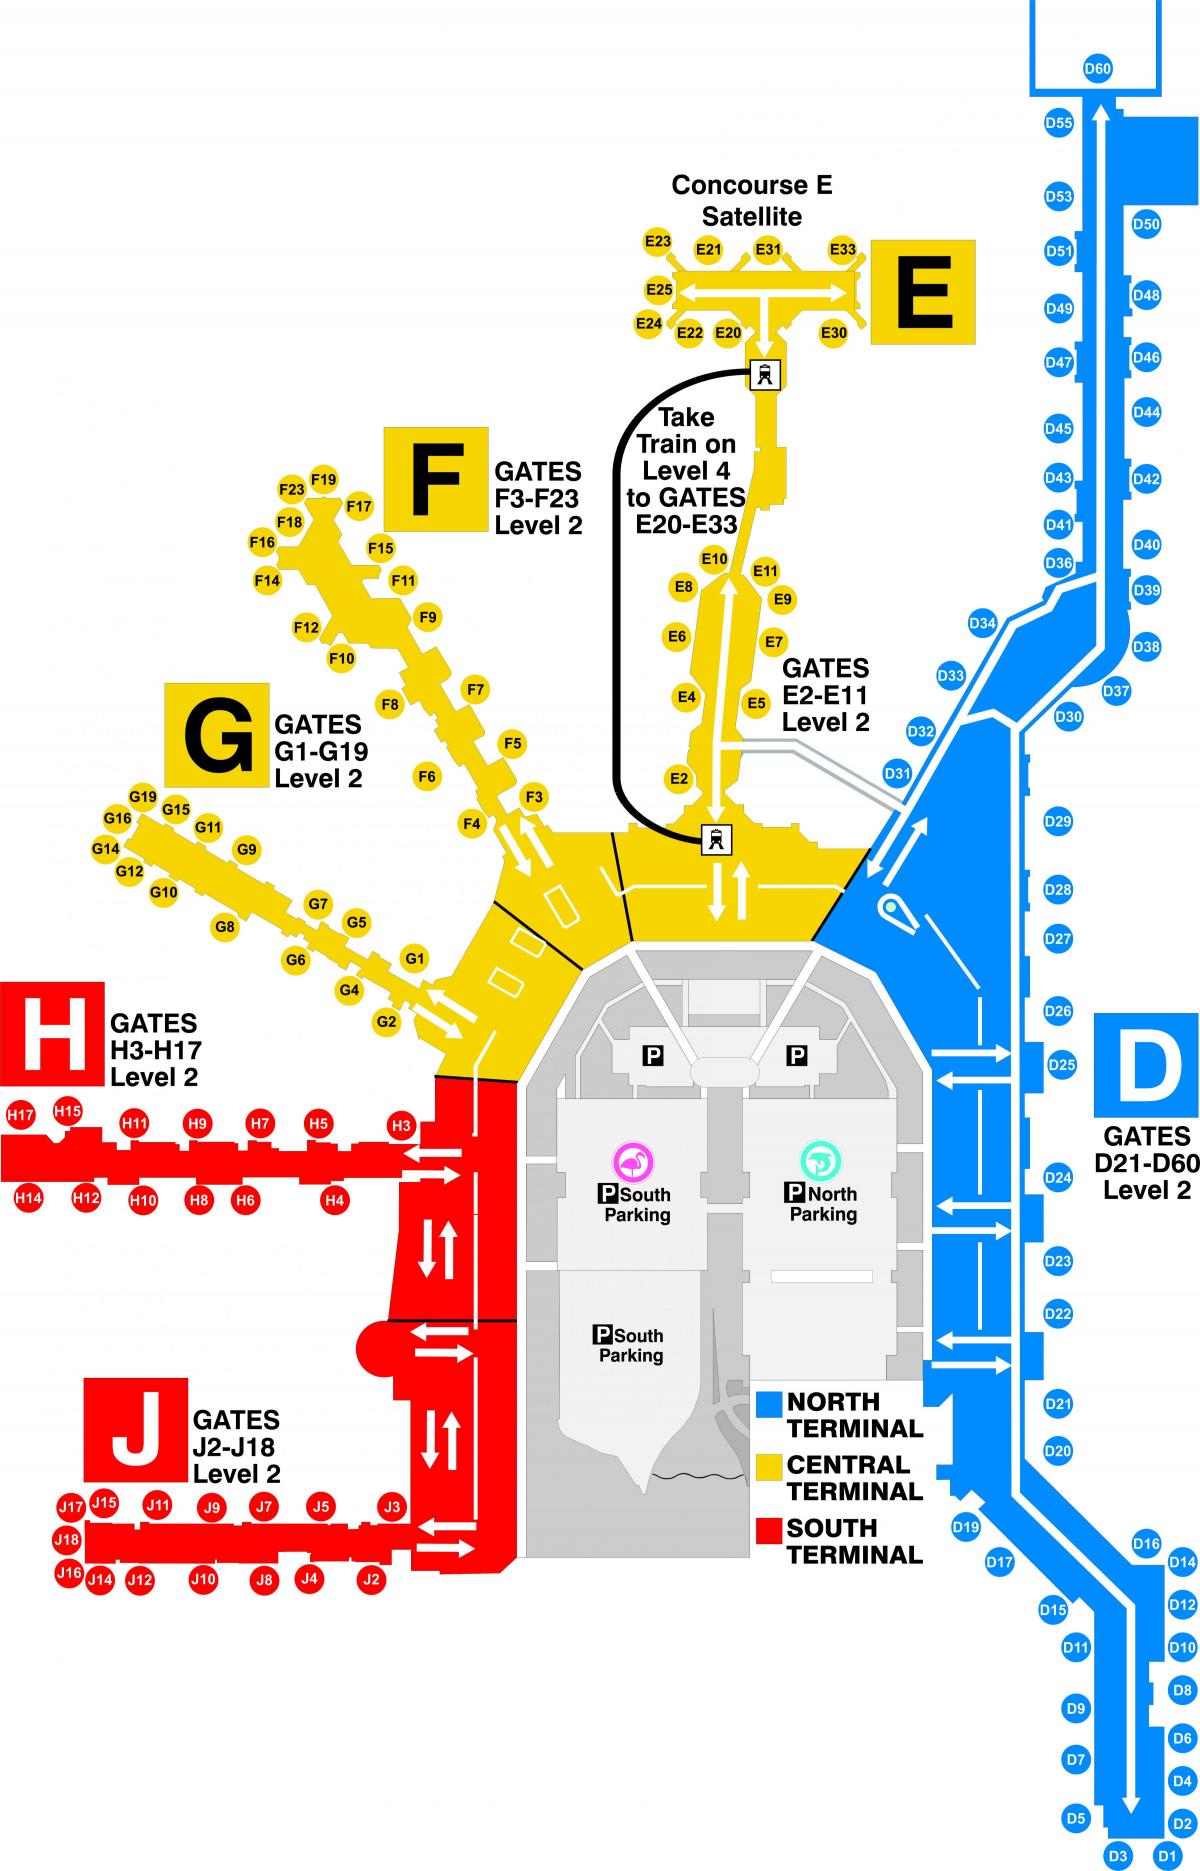 Miami airport terminal mappa